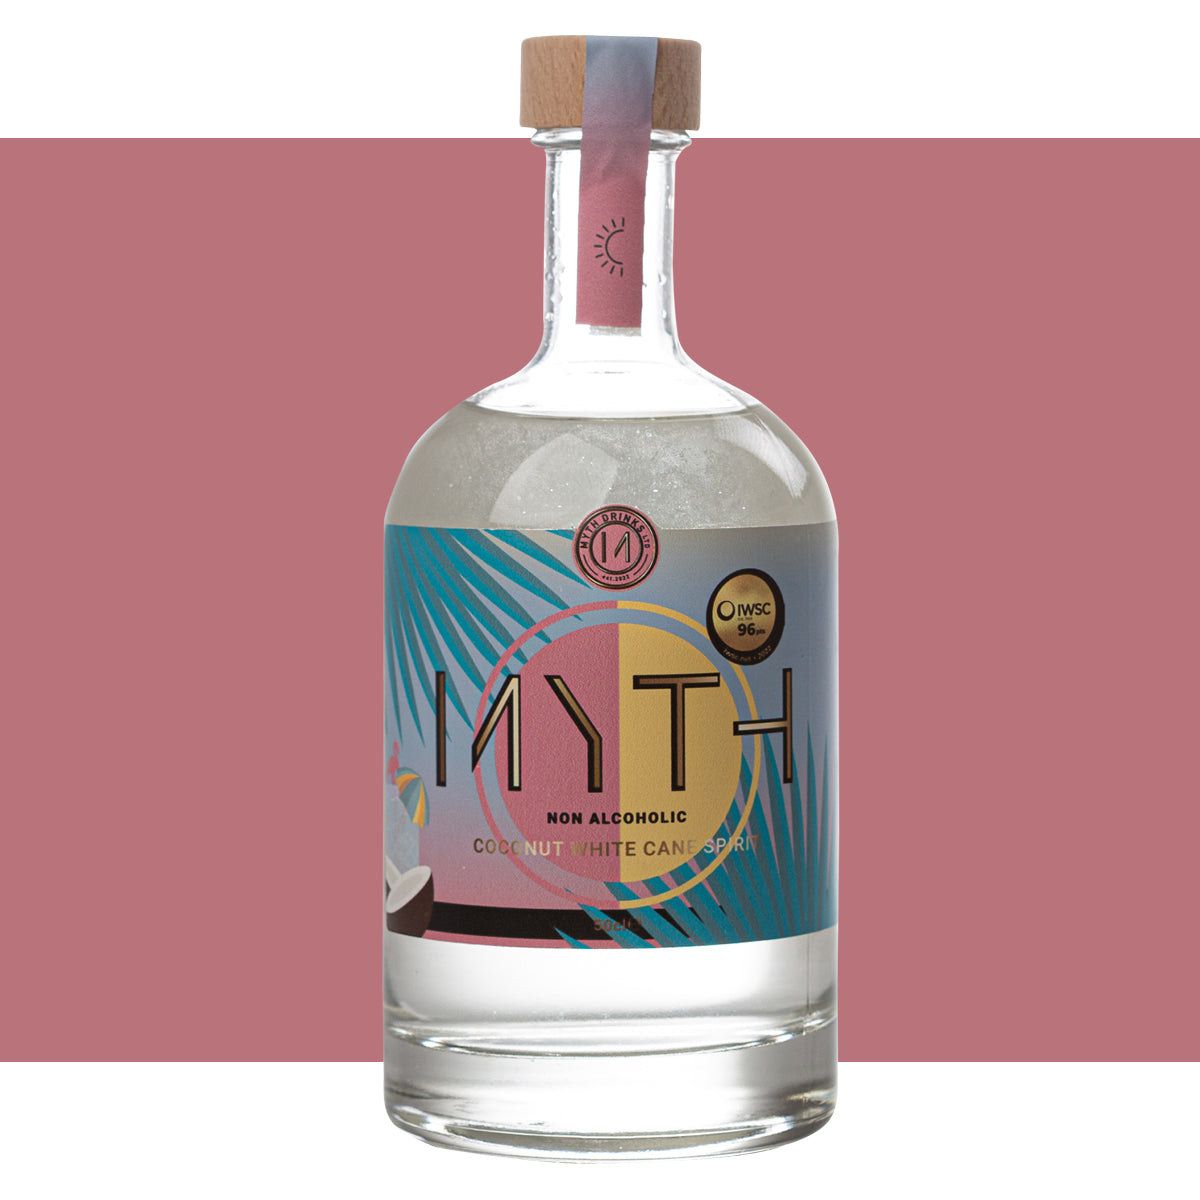 Myth White Cane Coconut Rum Alcohol Free Spirit